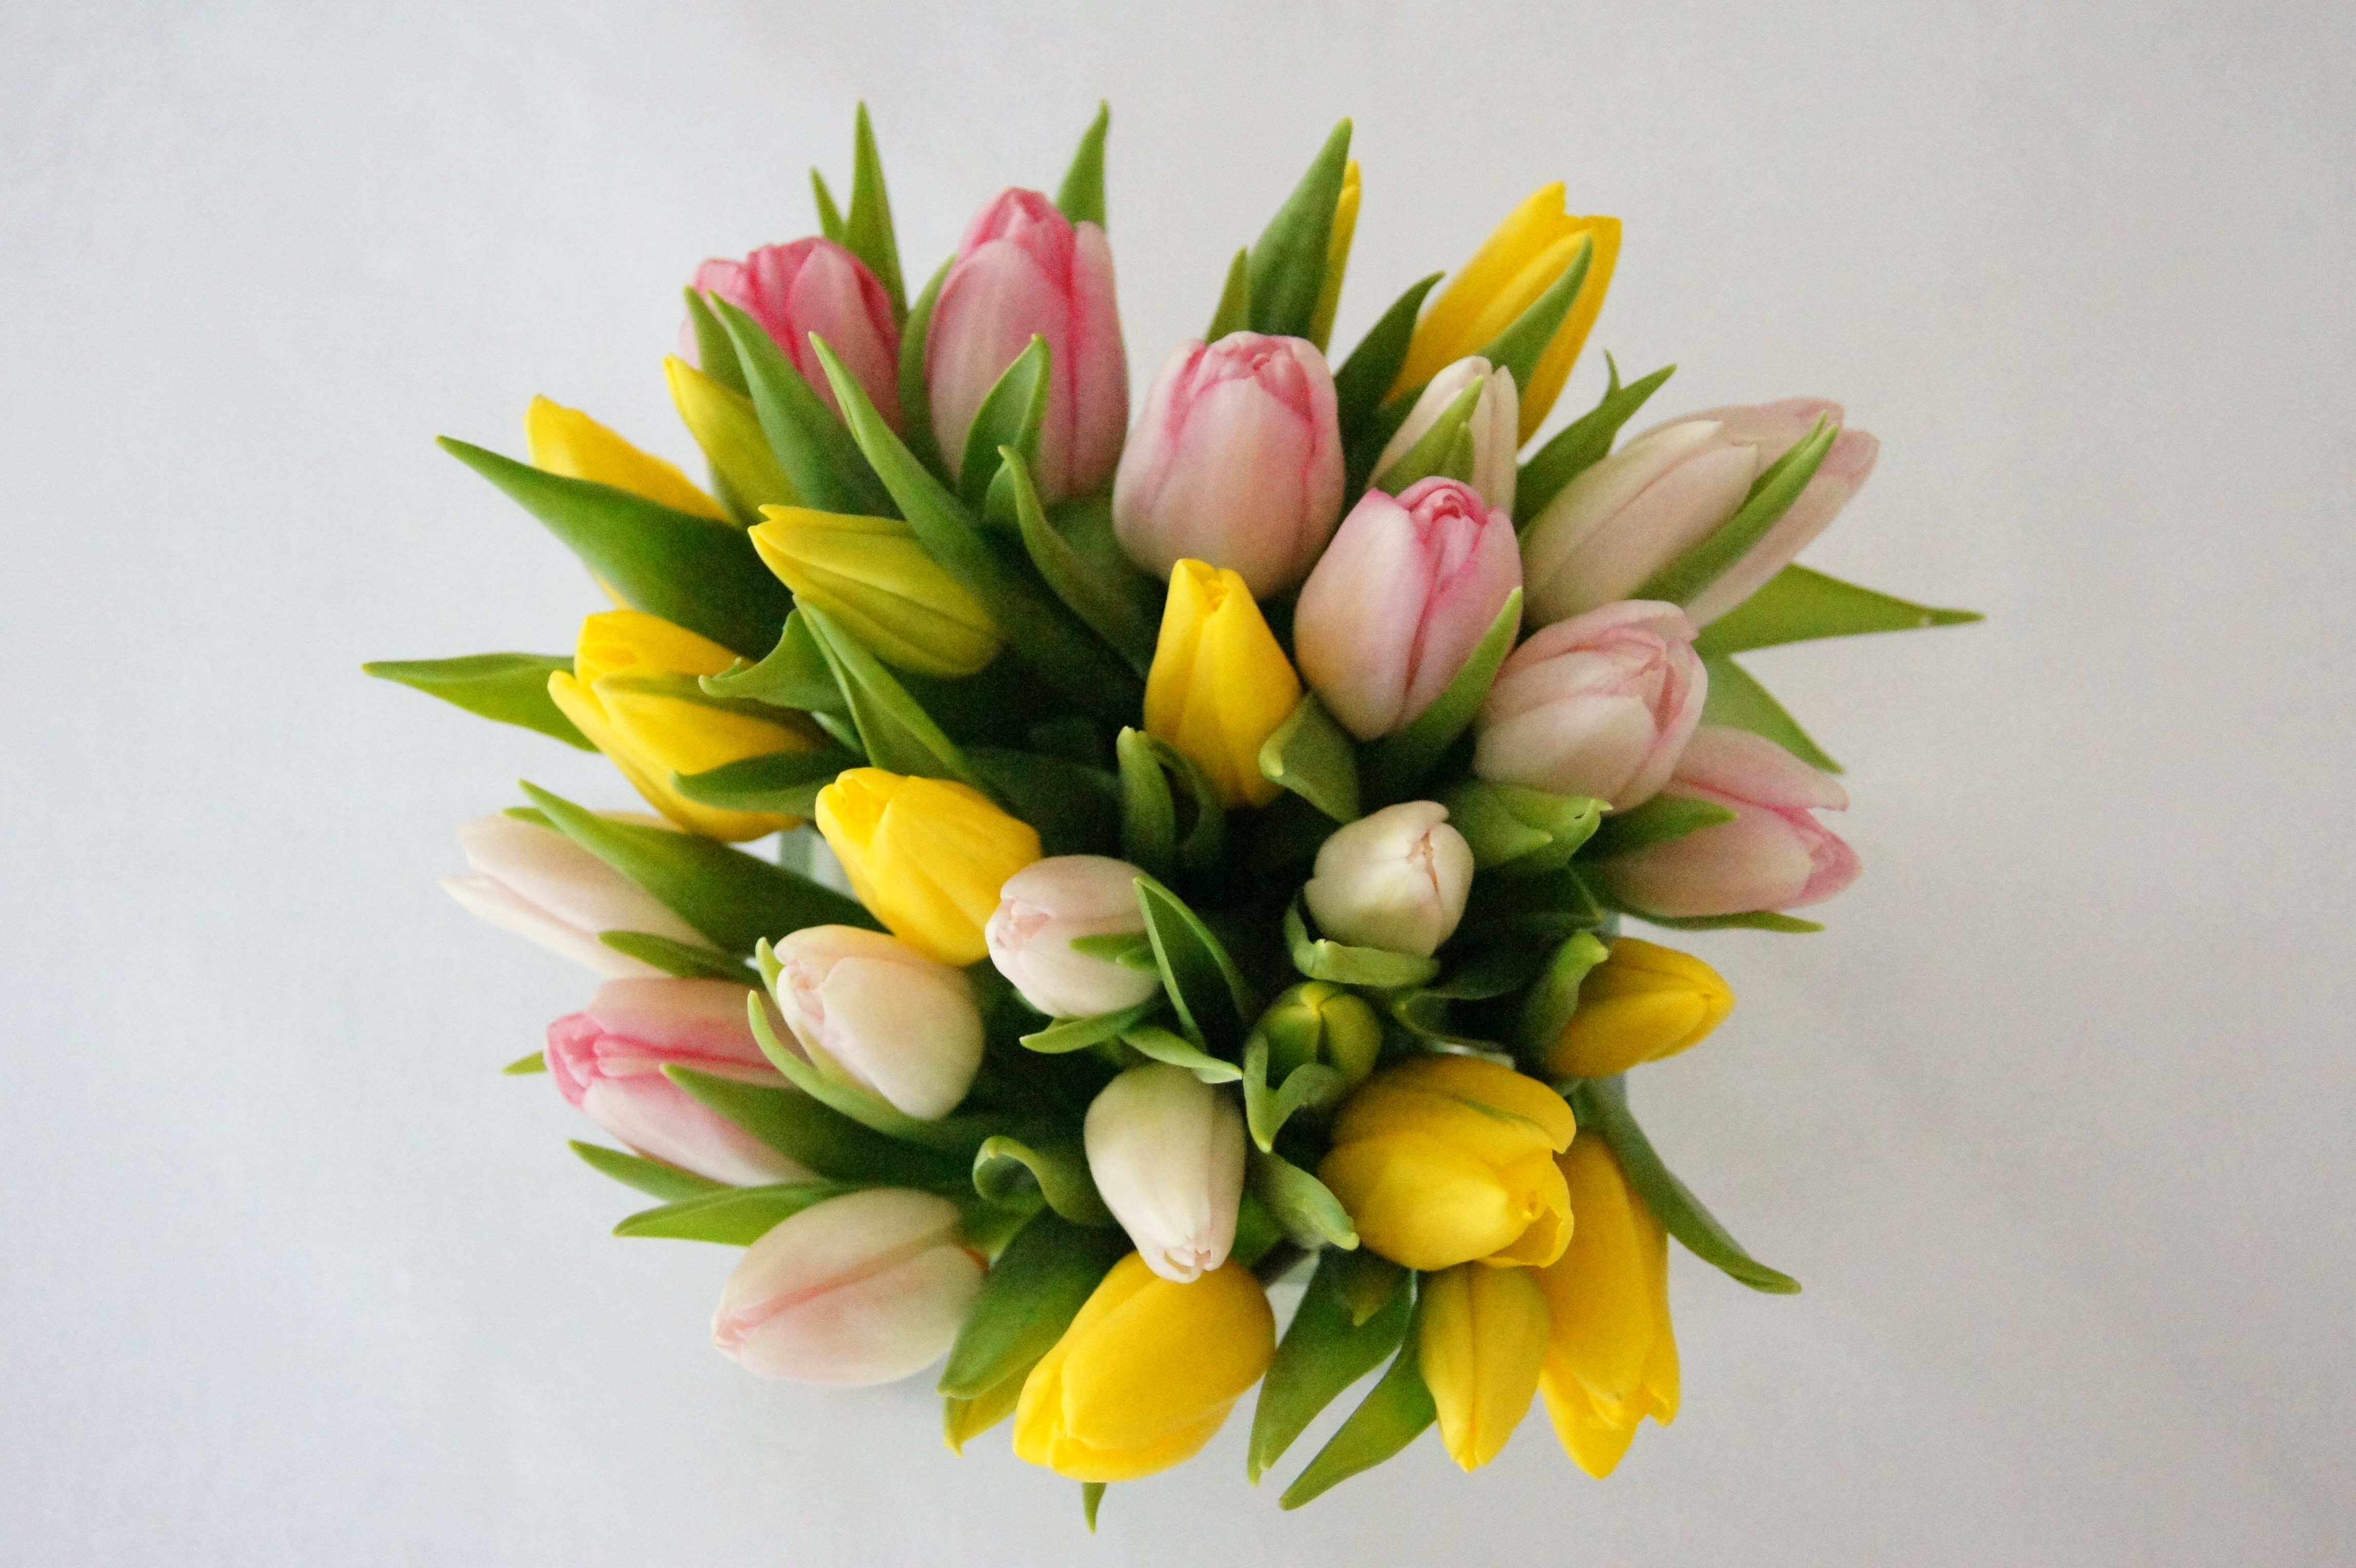 Tulip Arrangements: Step by Step How to Make a Tulip Arrangement